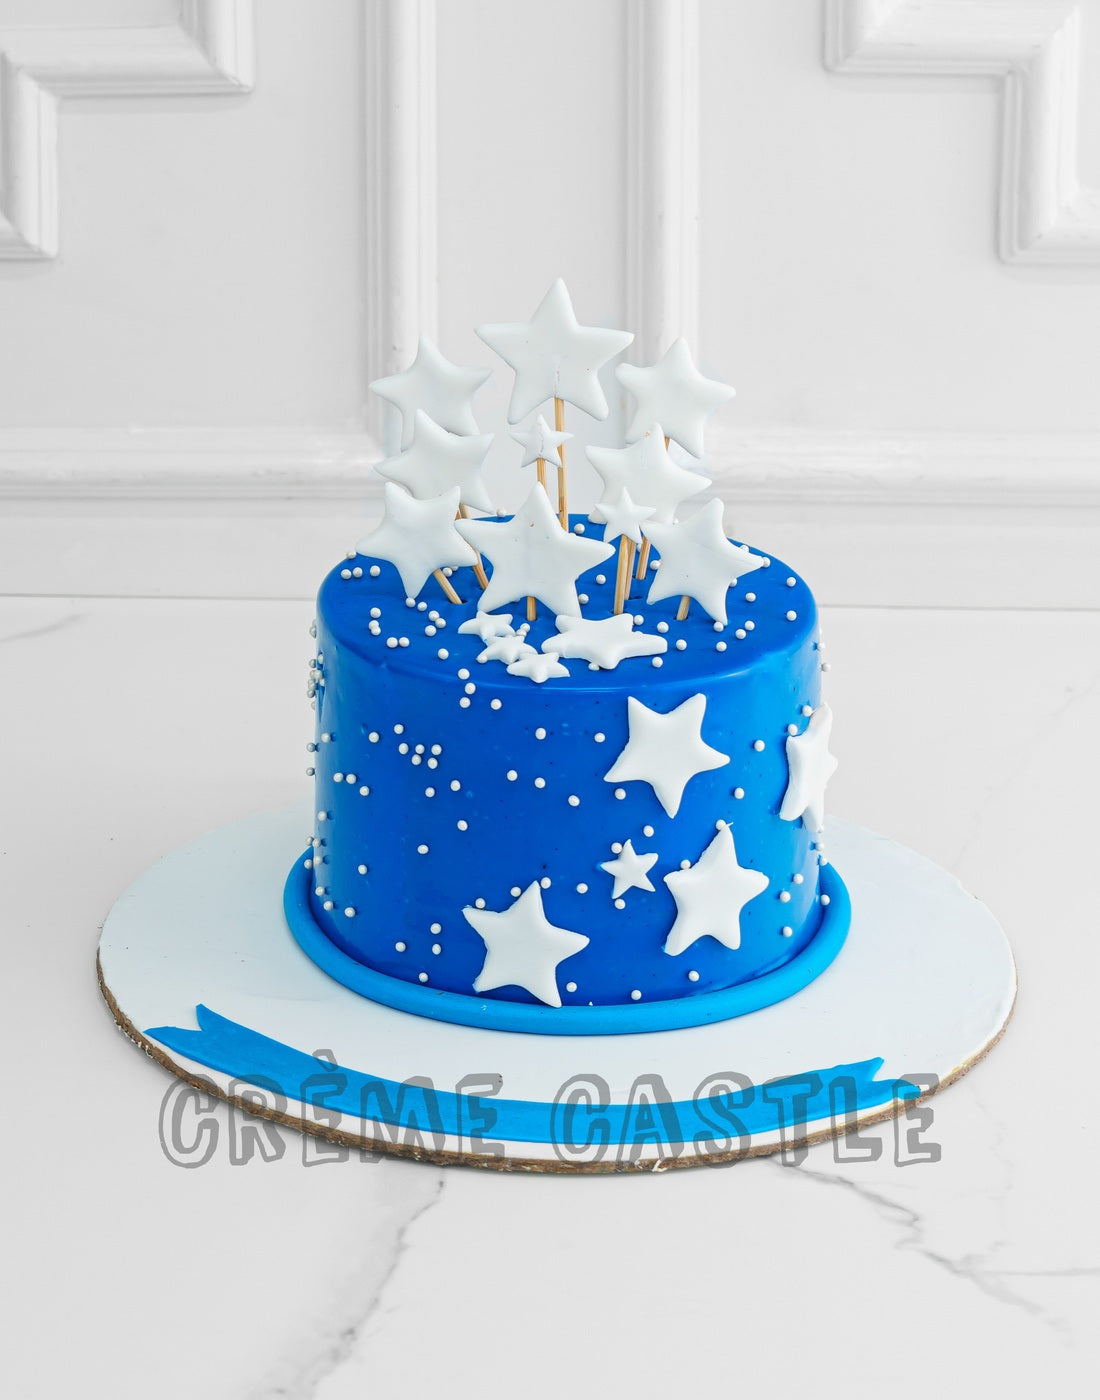 Starry night cake : r/cakedecorating